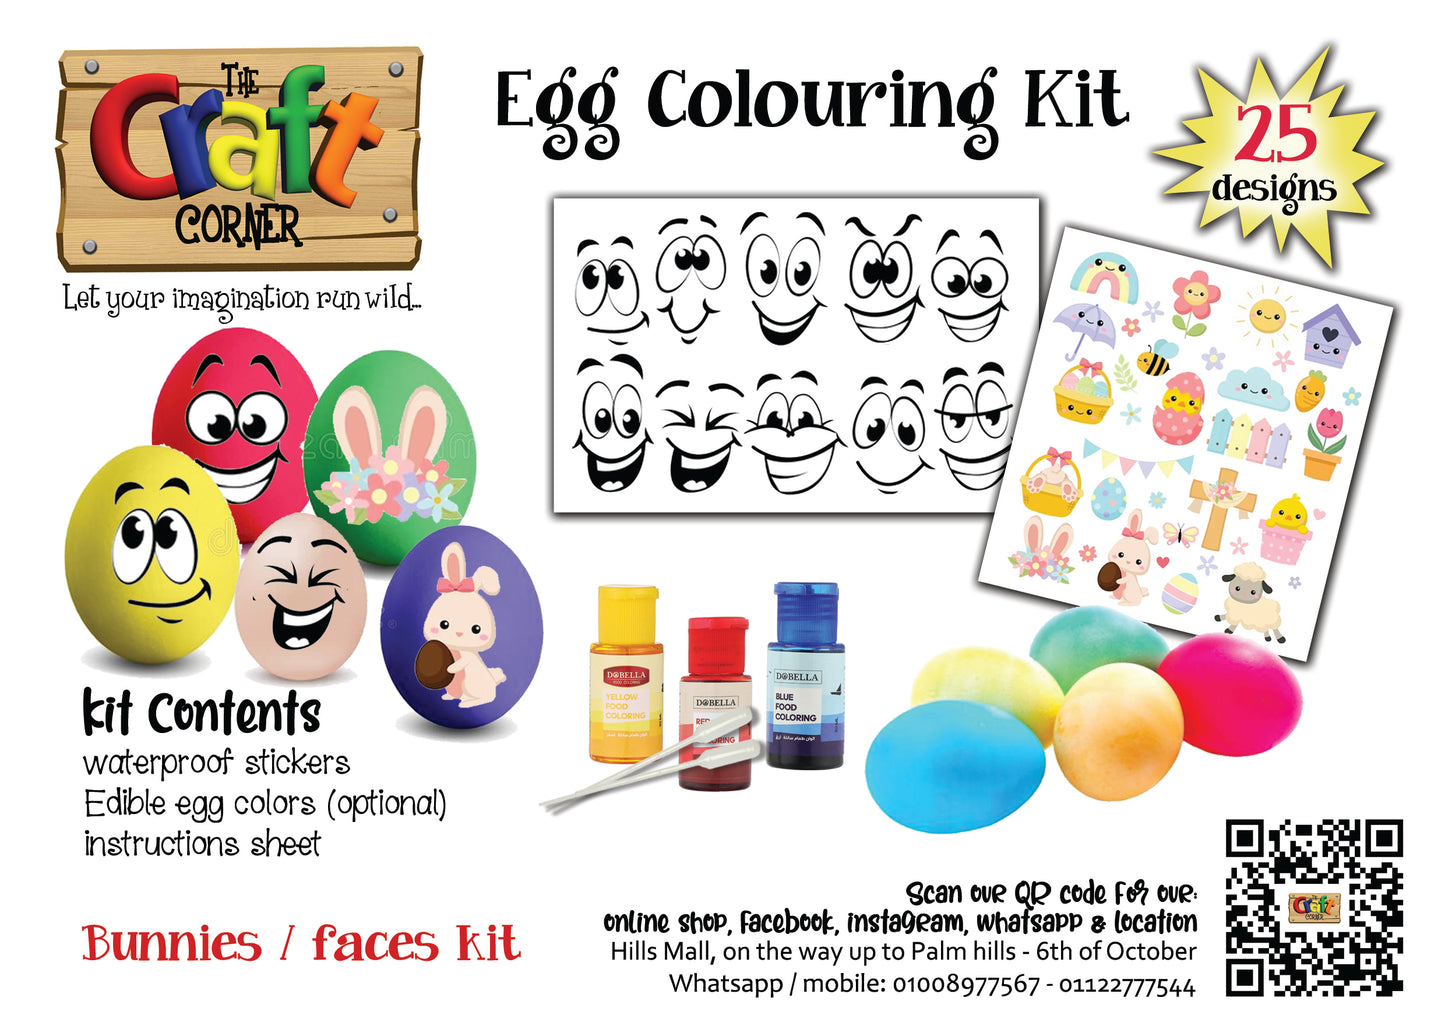 Egg colouring kit 2 (Chicks, bunnies & faces kit)